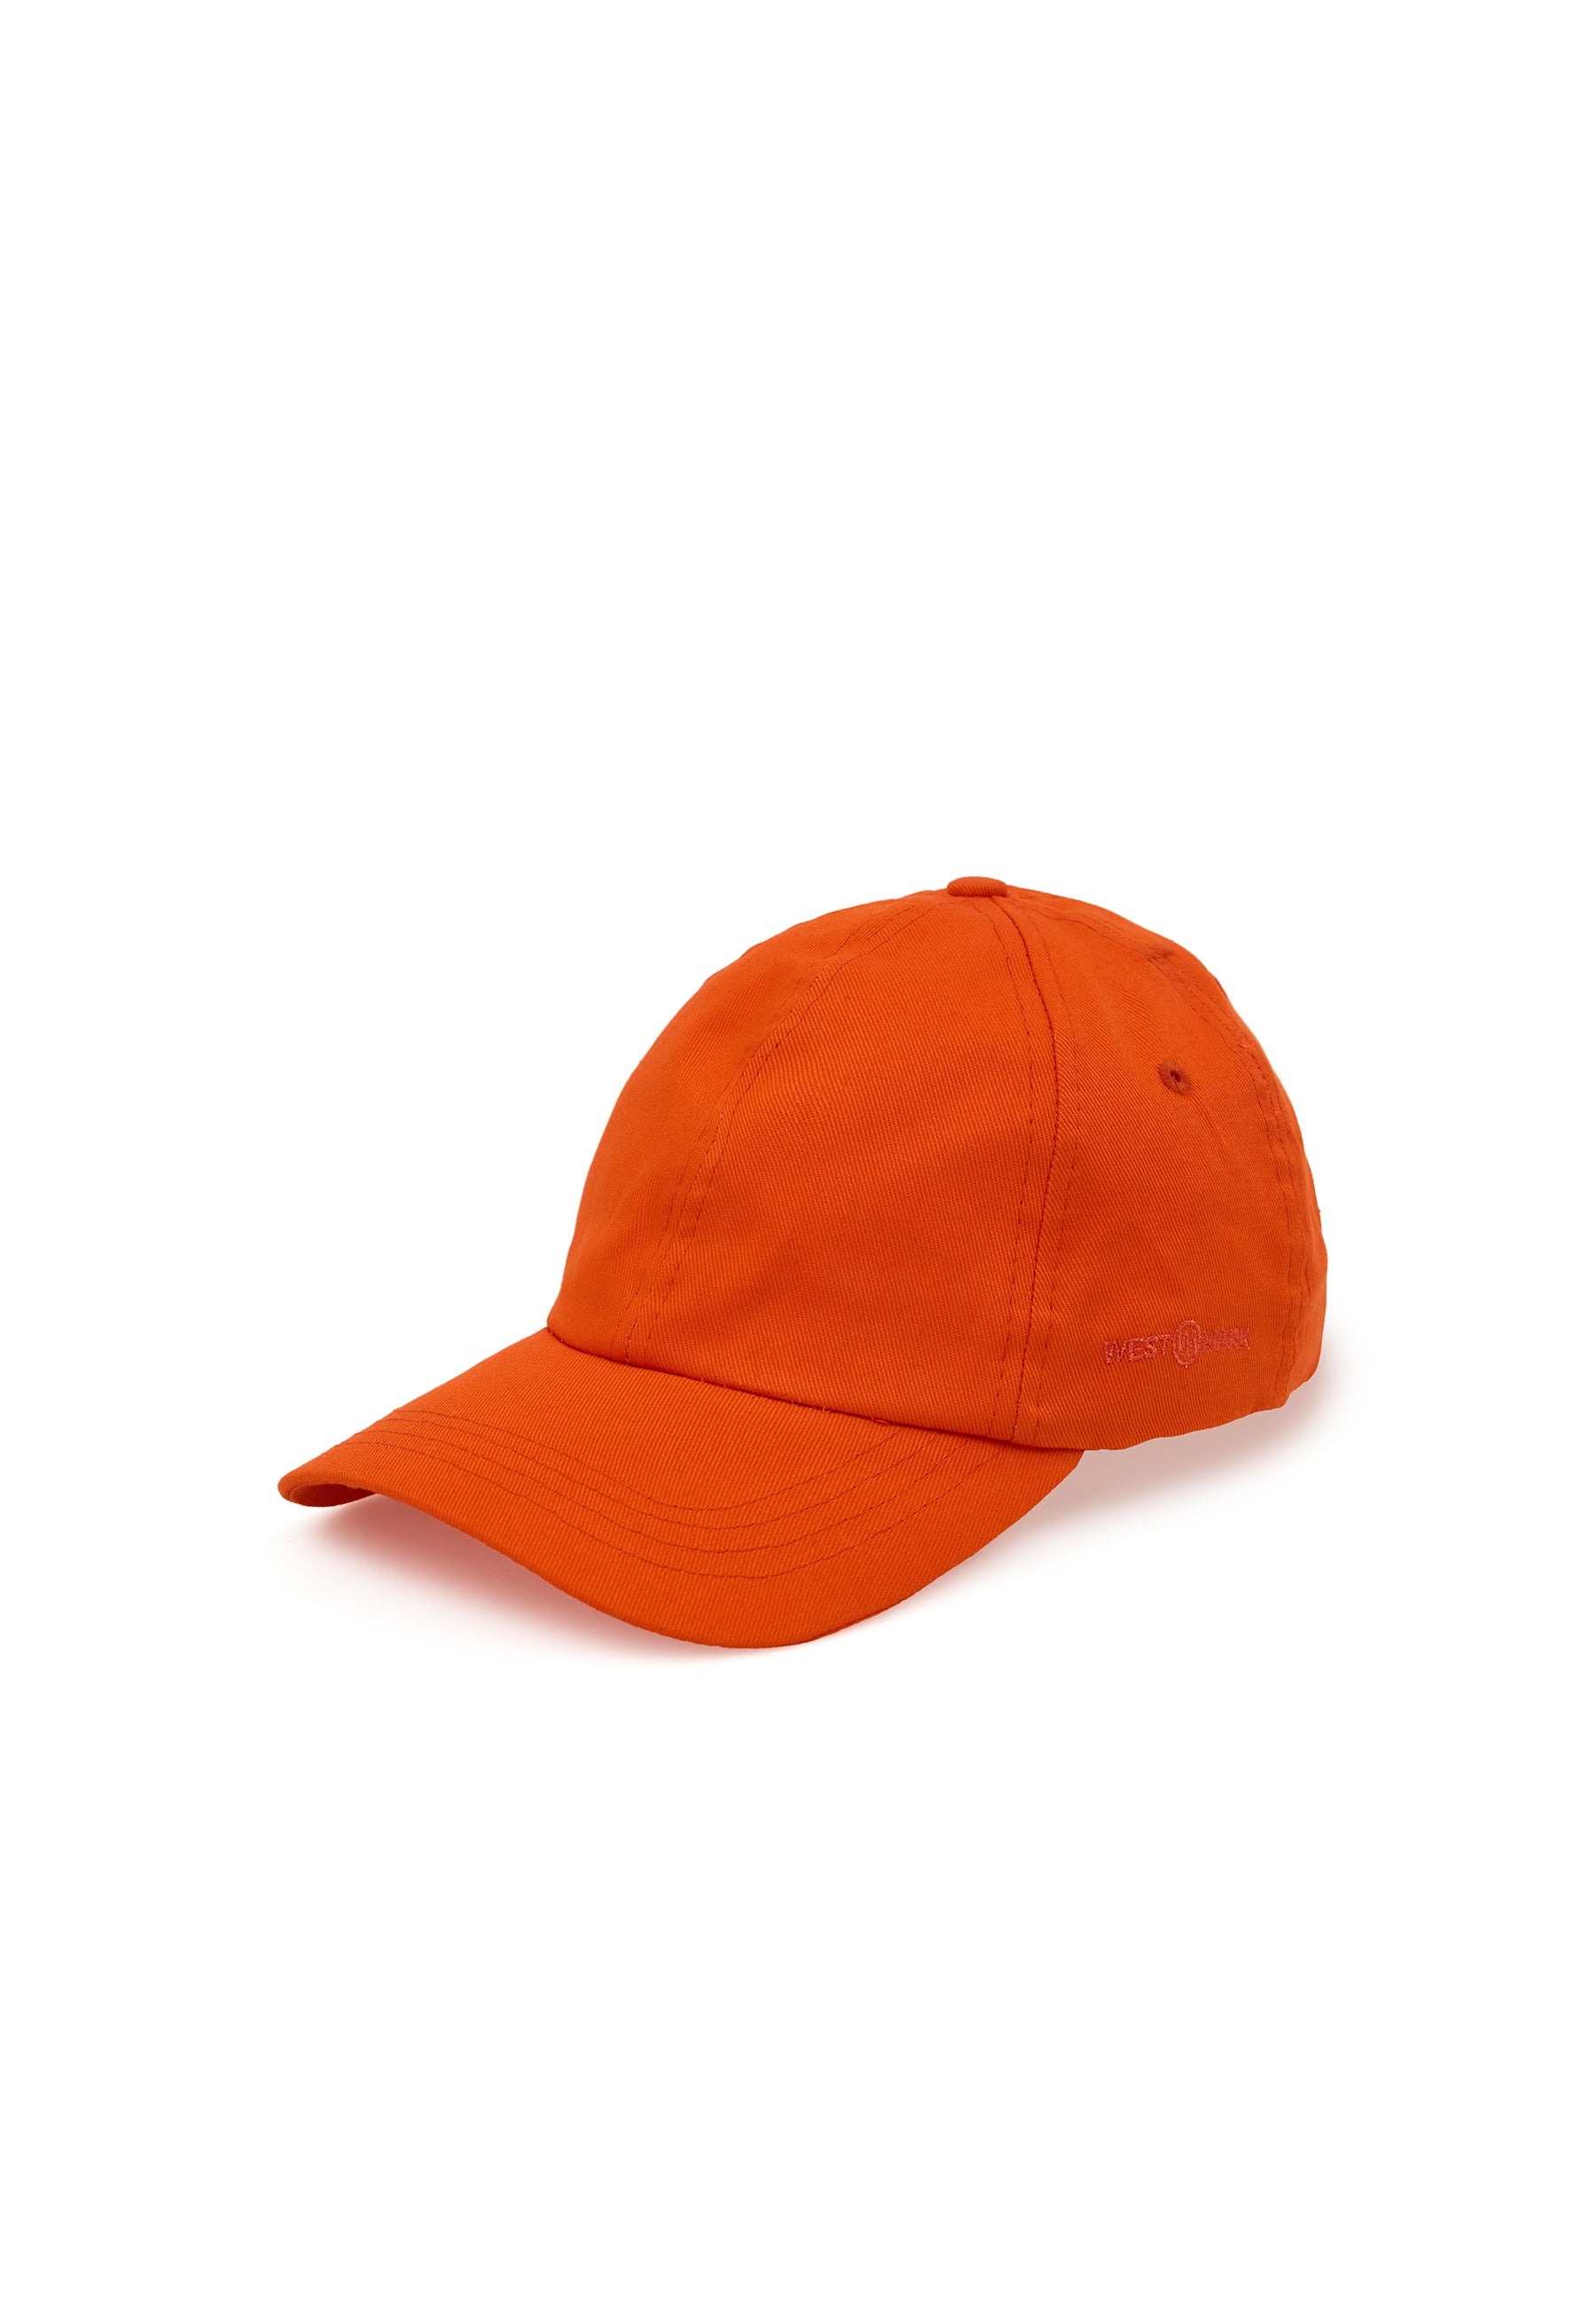 WMCARTER CAP in Orange